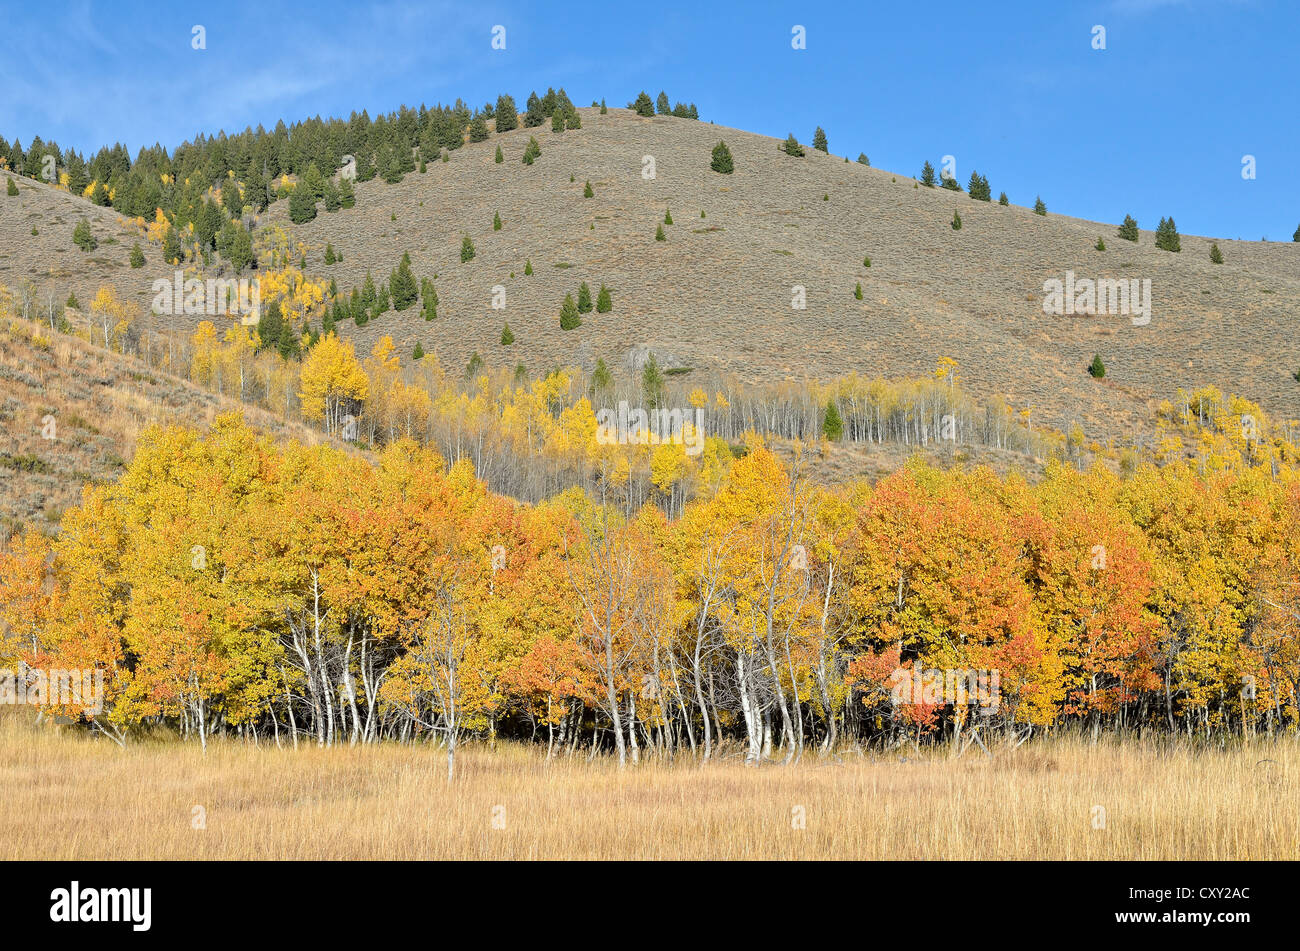 Aspen trees (Populus tremula) with autumnal coloured foliage, Highway 75, Ketchum, Idaho, USA Stock Photo